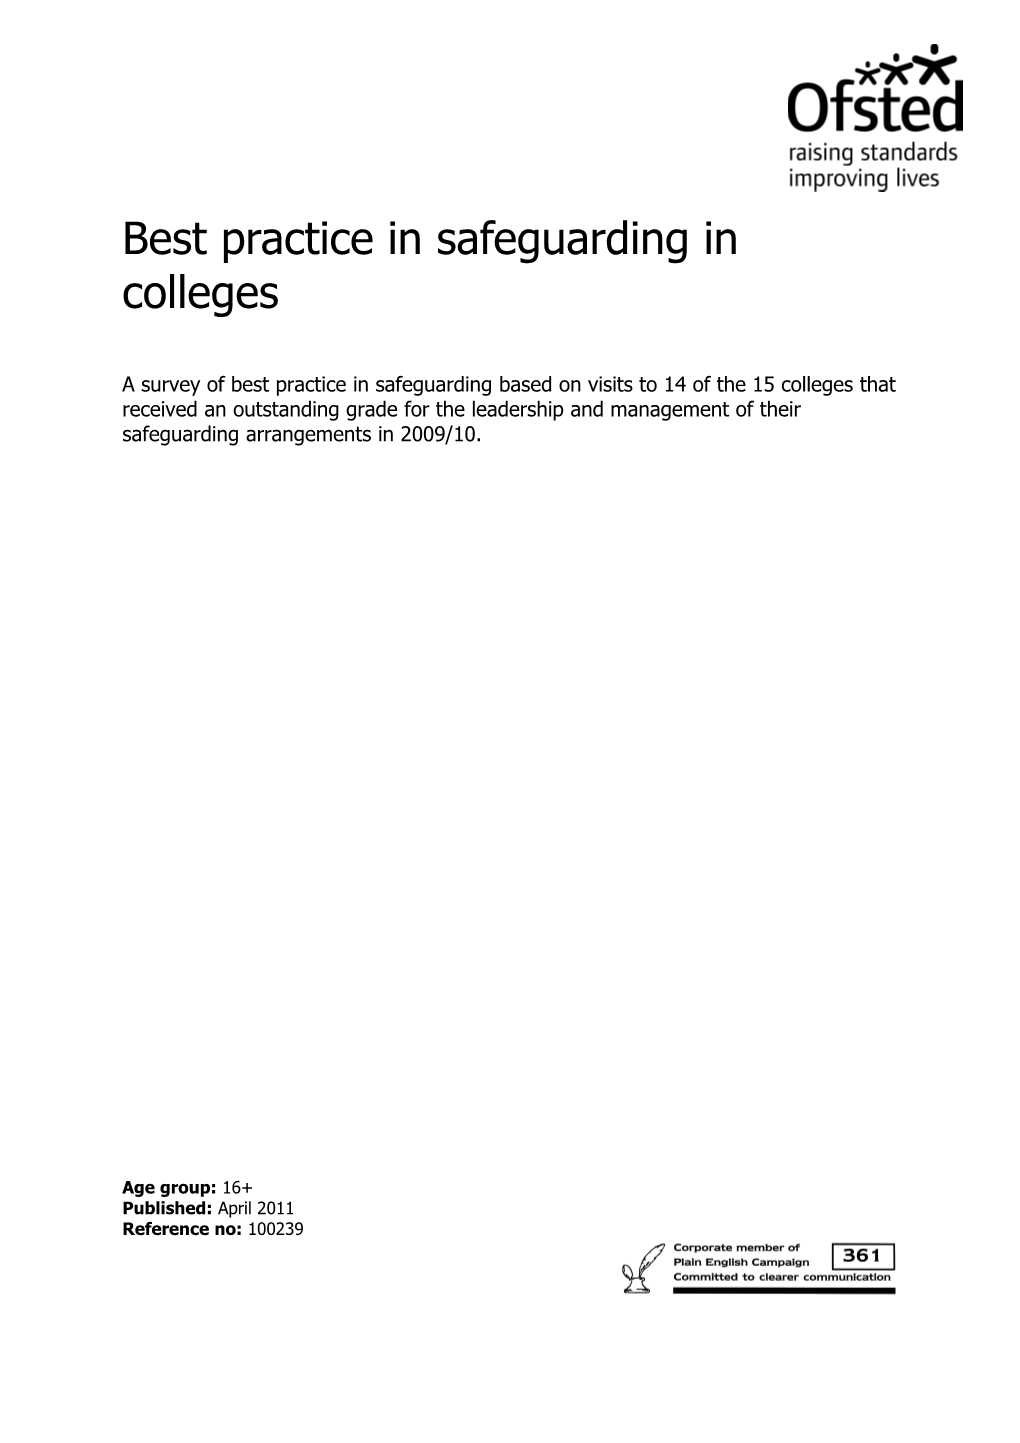 Best Practice in Safeguarding in Colleges